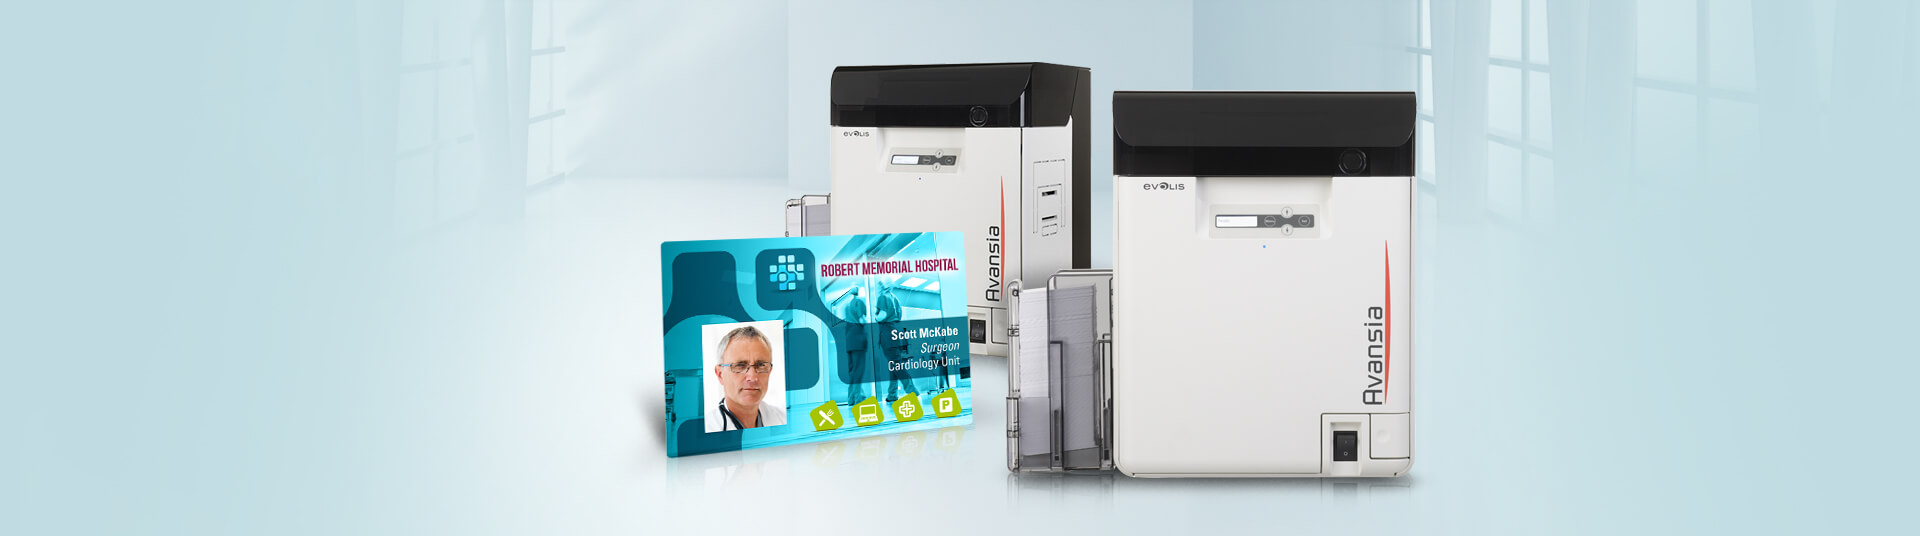 Evolis Avansia ID Card Printers